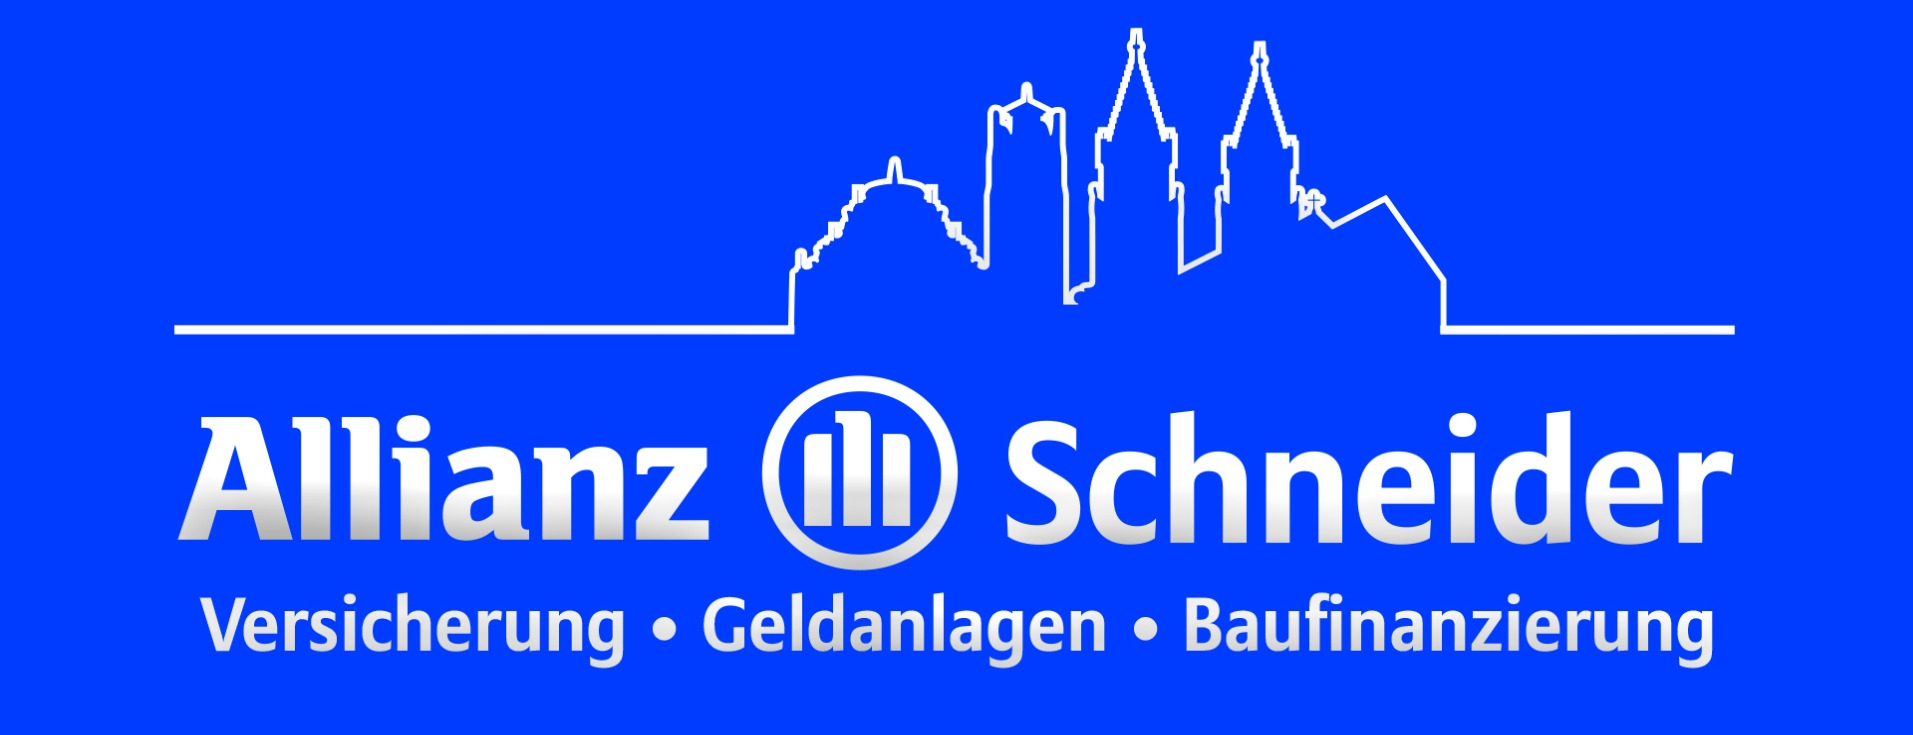 Allianz Versicherung Frank Schneider Oschatz - Oschatz Versicherung, Geldanlage, Baufinanzierung